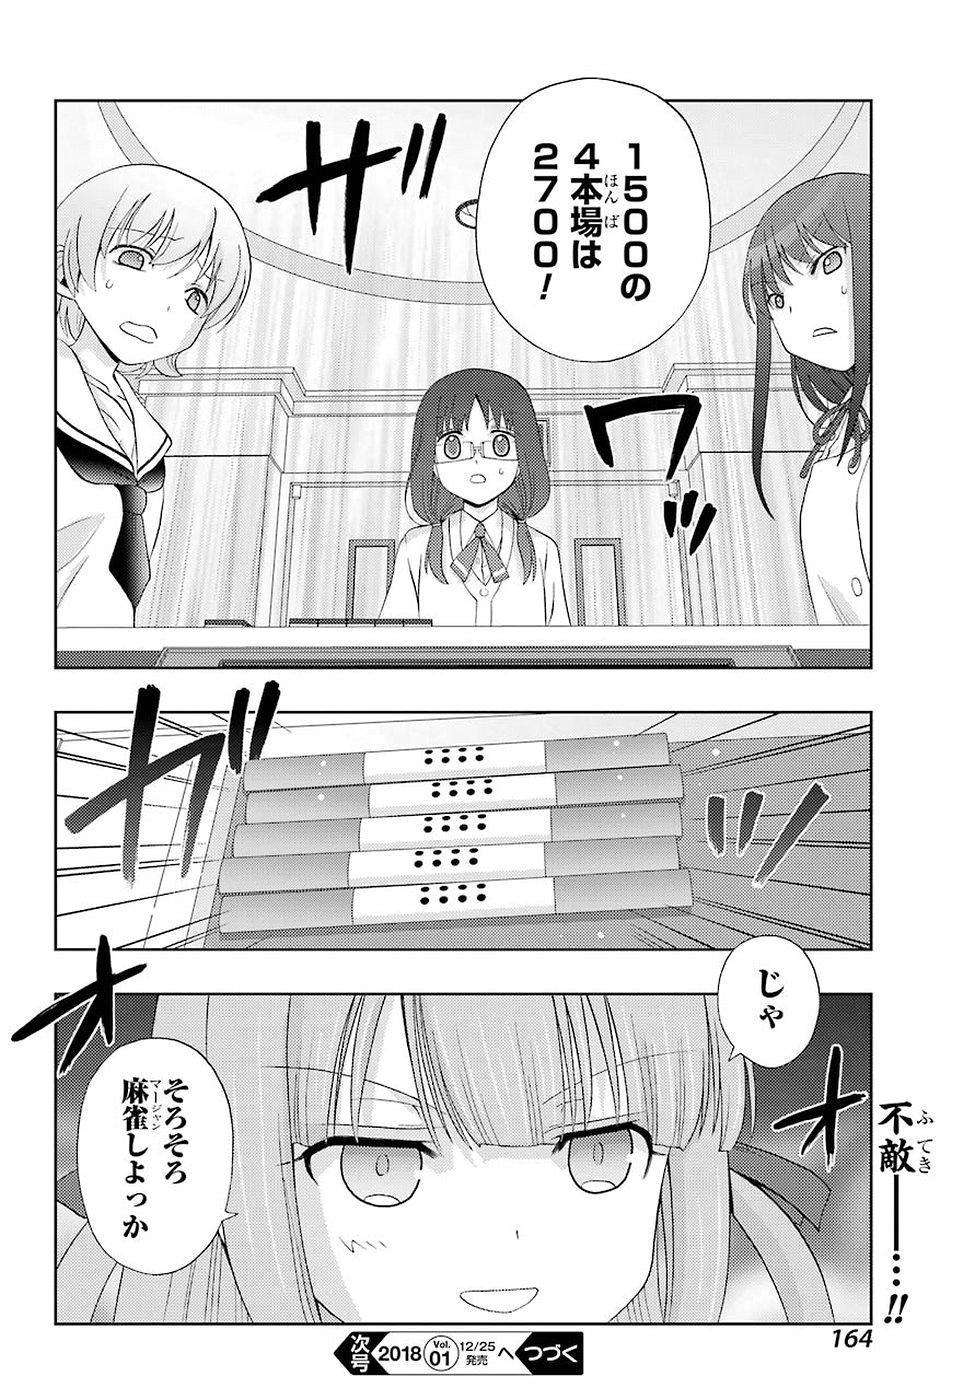 Shinohayu - The Dawn of Age Manga - Chapter 051 - Page 30